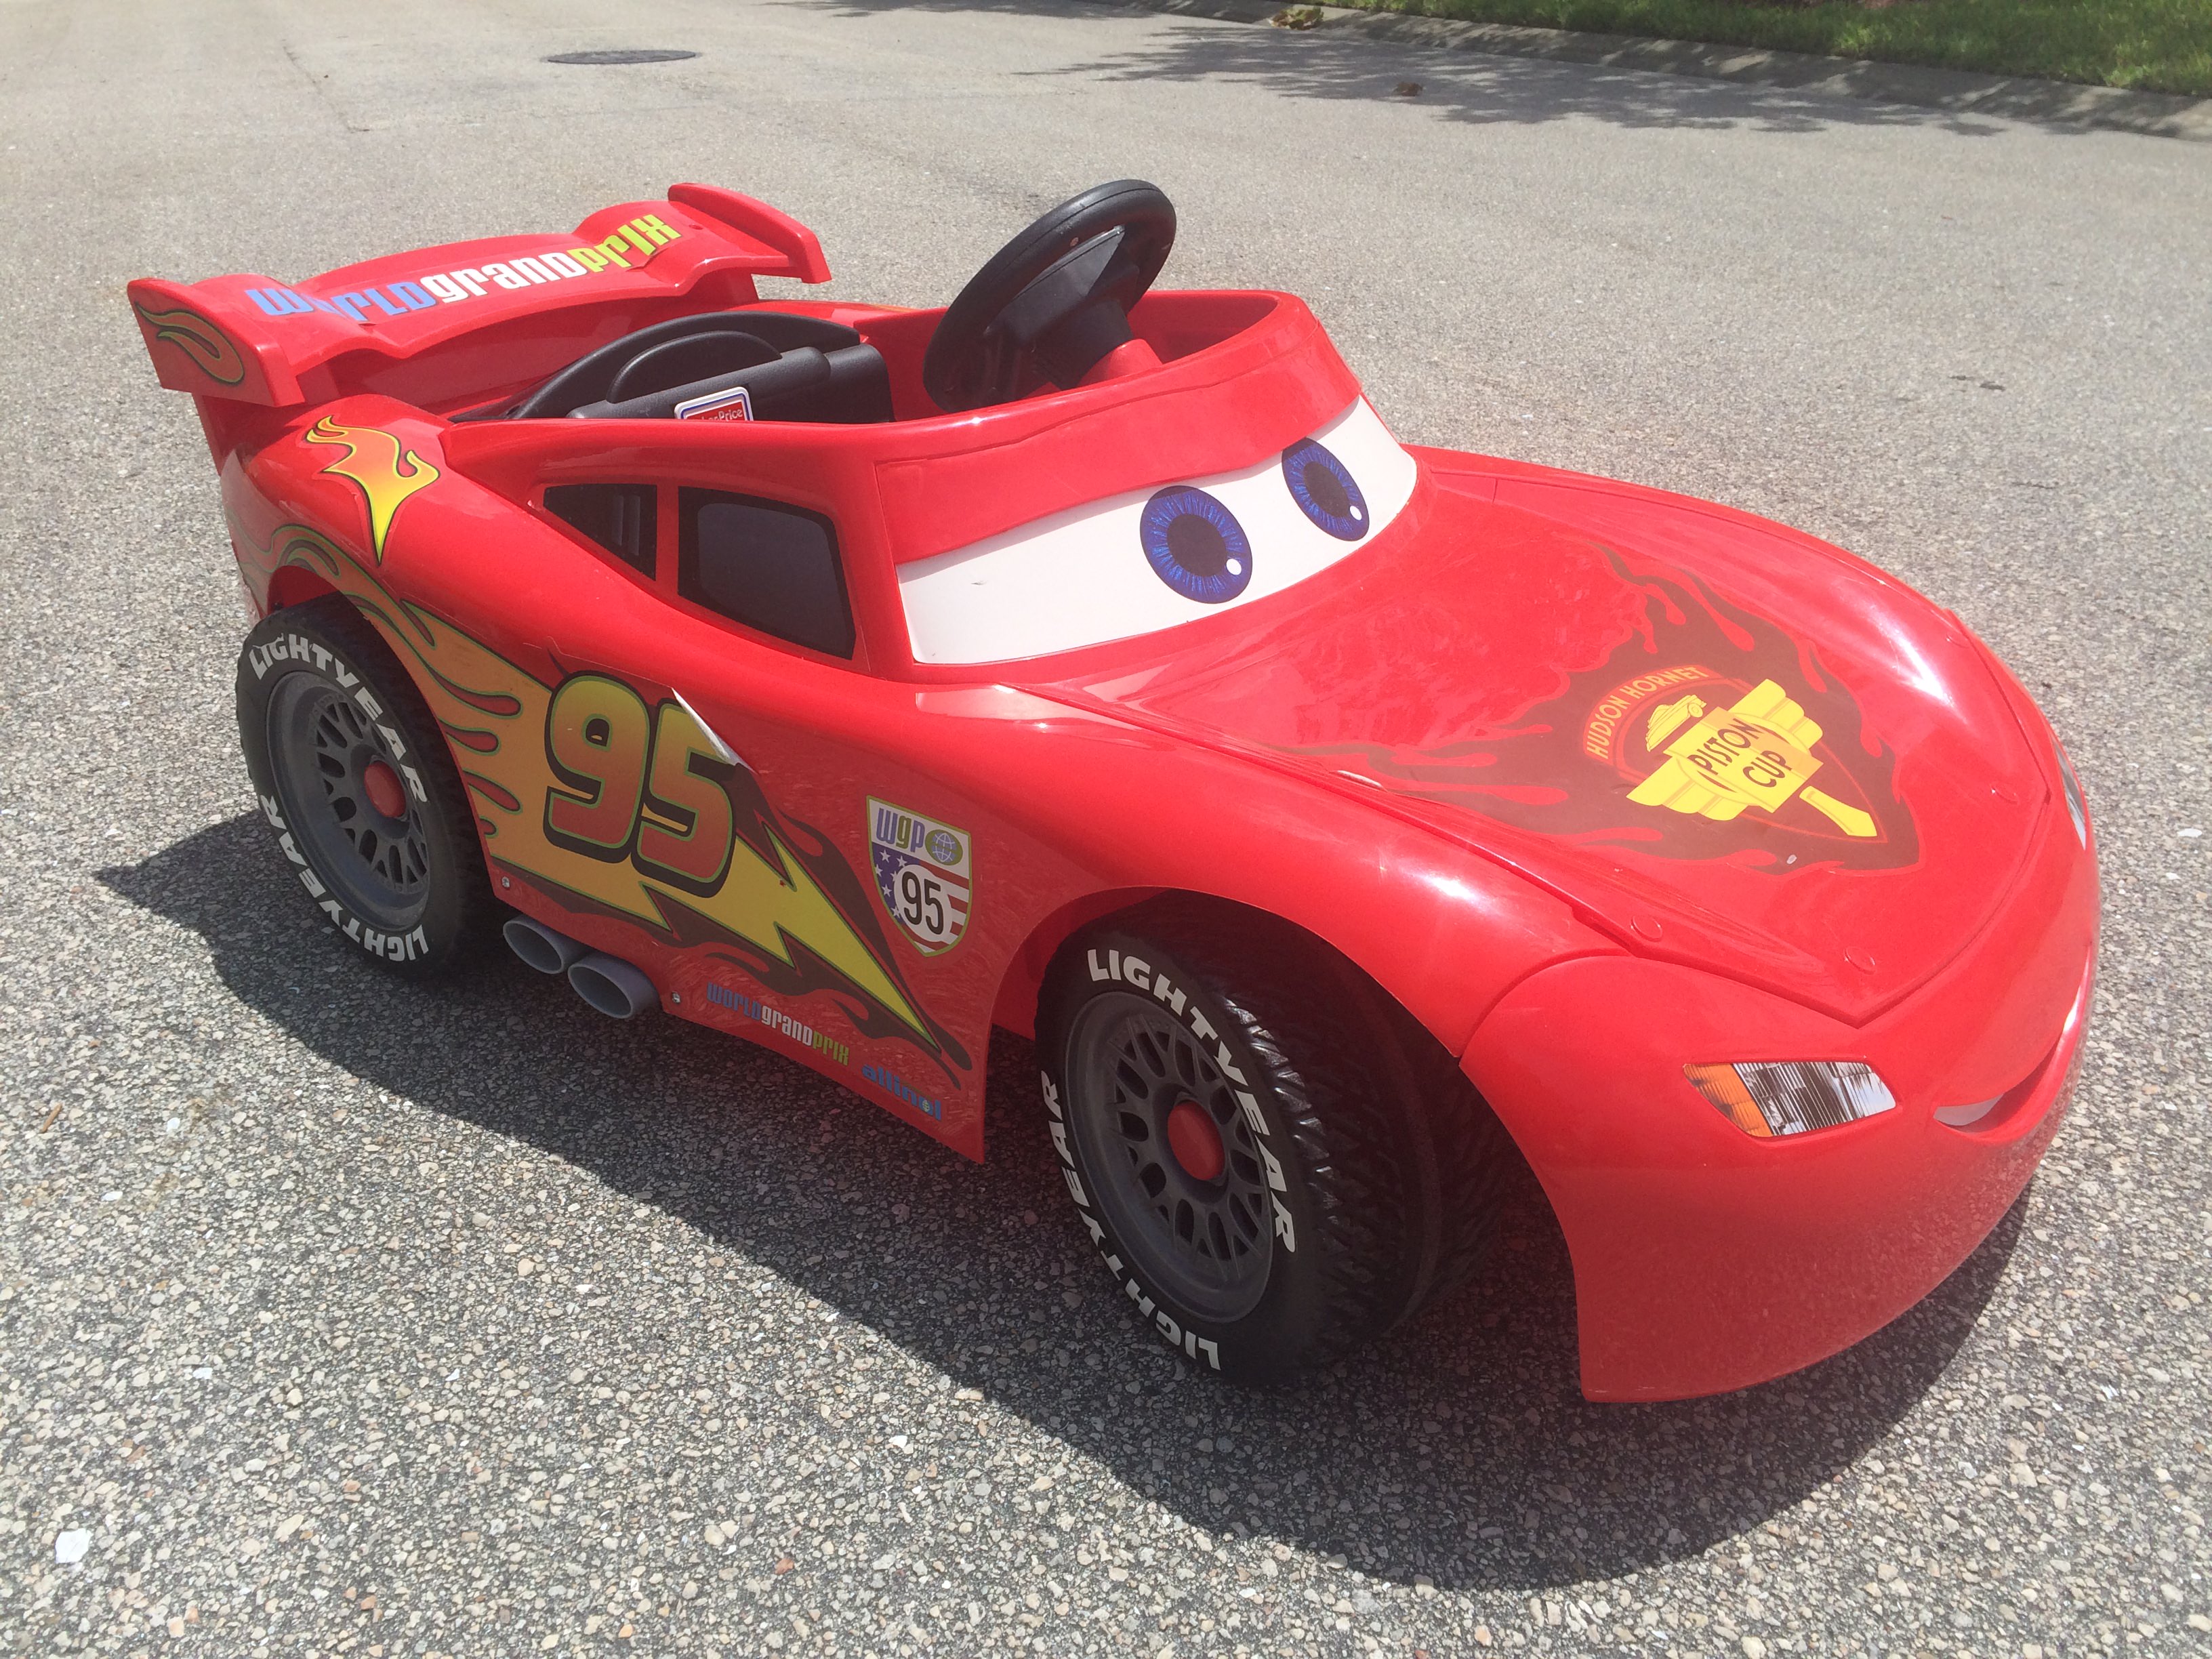 Disney Pixar Cars 3 Lightning Mcqueen Vehicle 3 Light